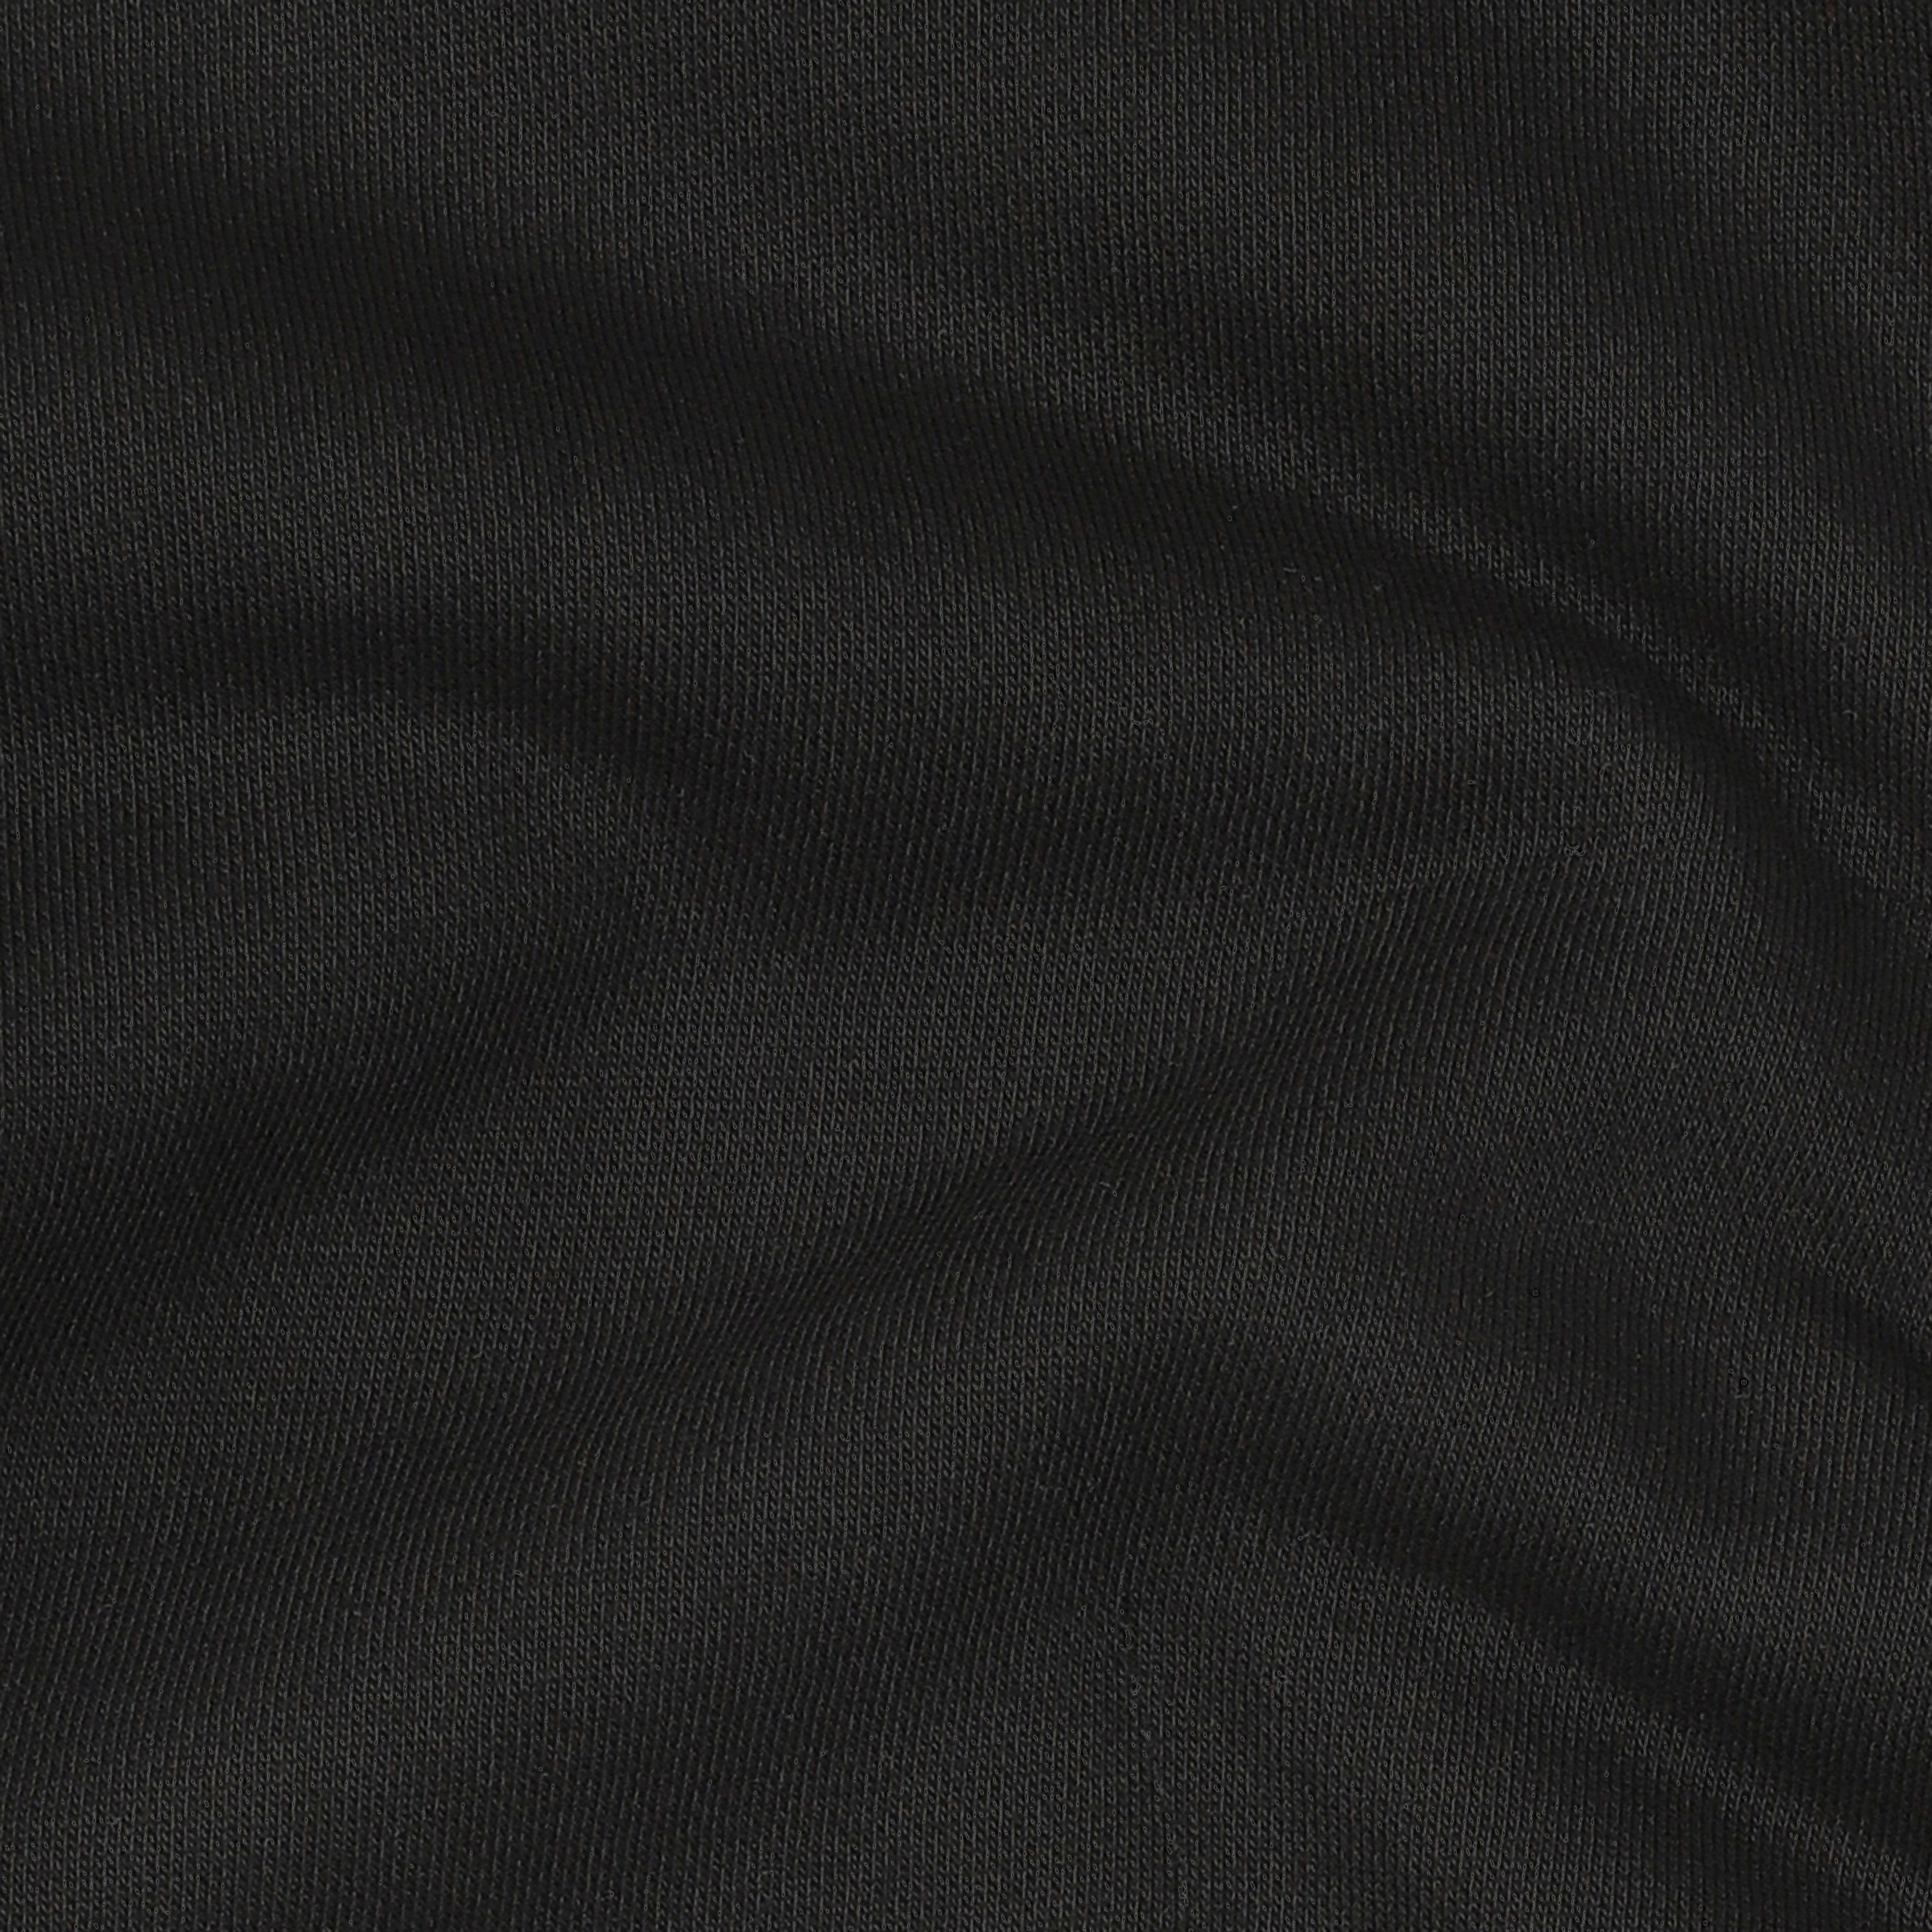 Oversized Hoodie Black close up fabric